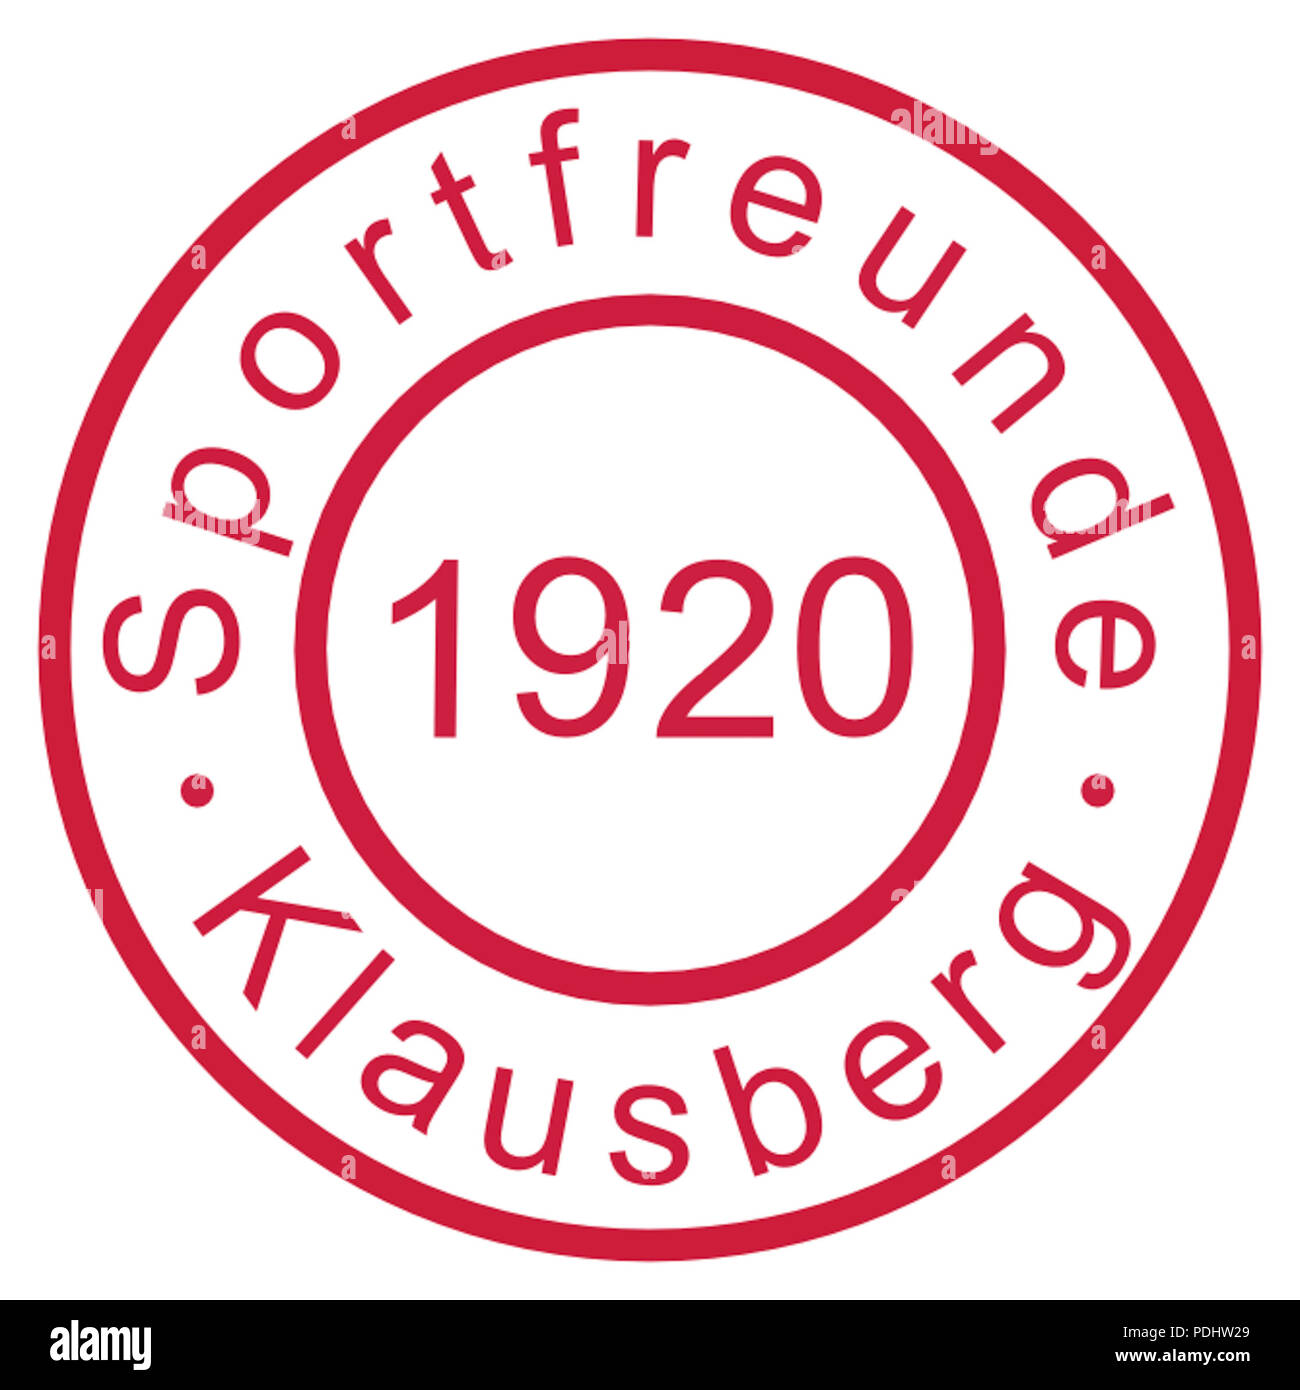 300 Sportfreunde Klausberg Stock Photo